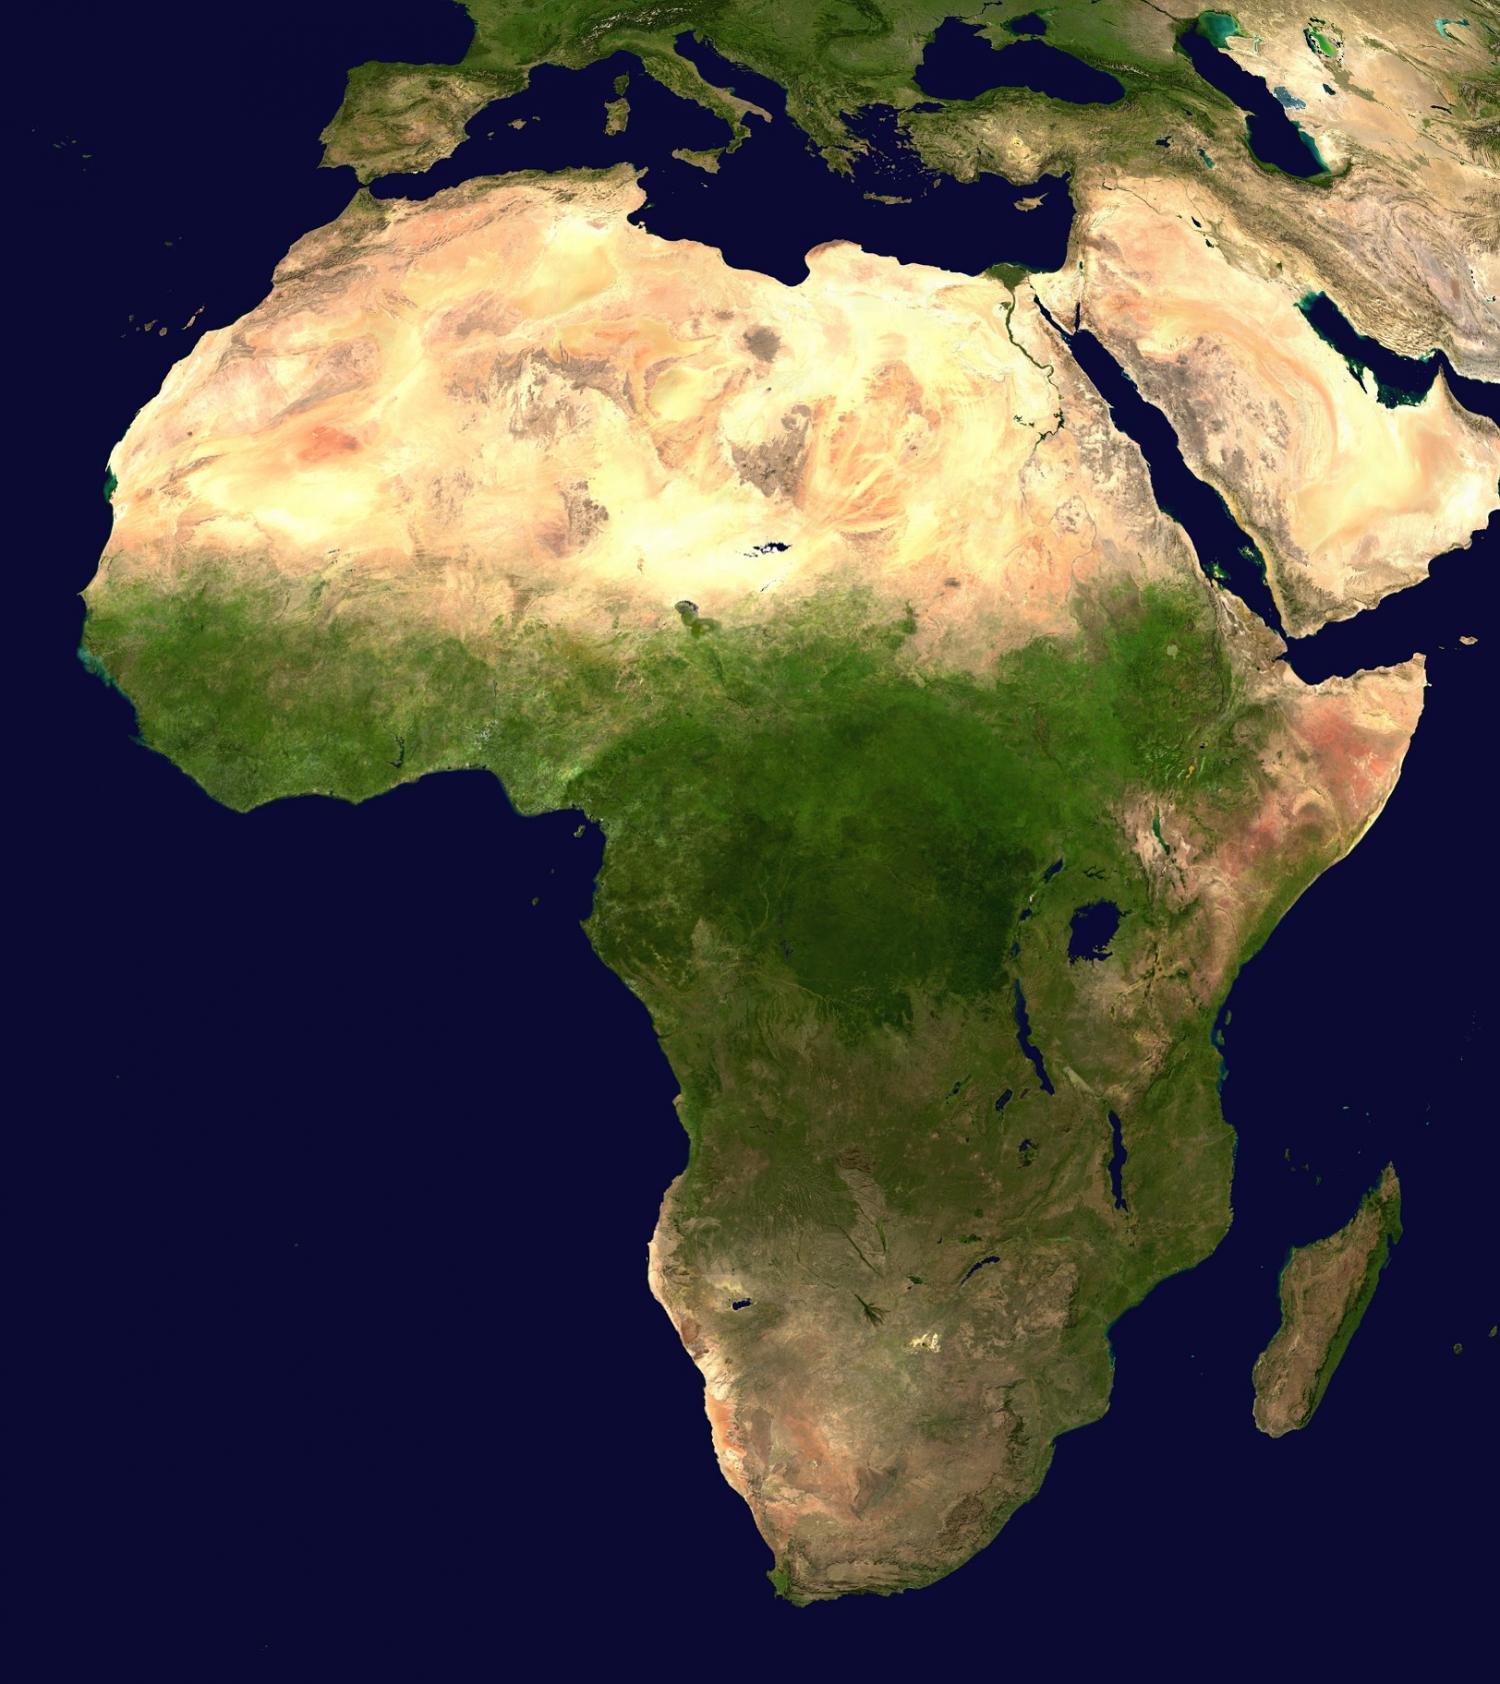 Africa is splitting in two